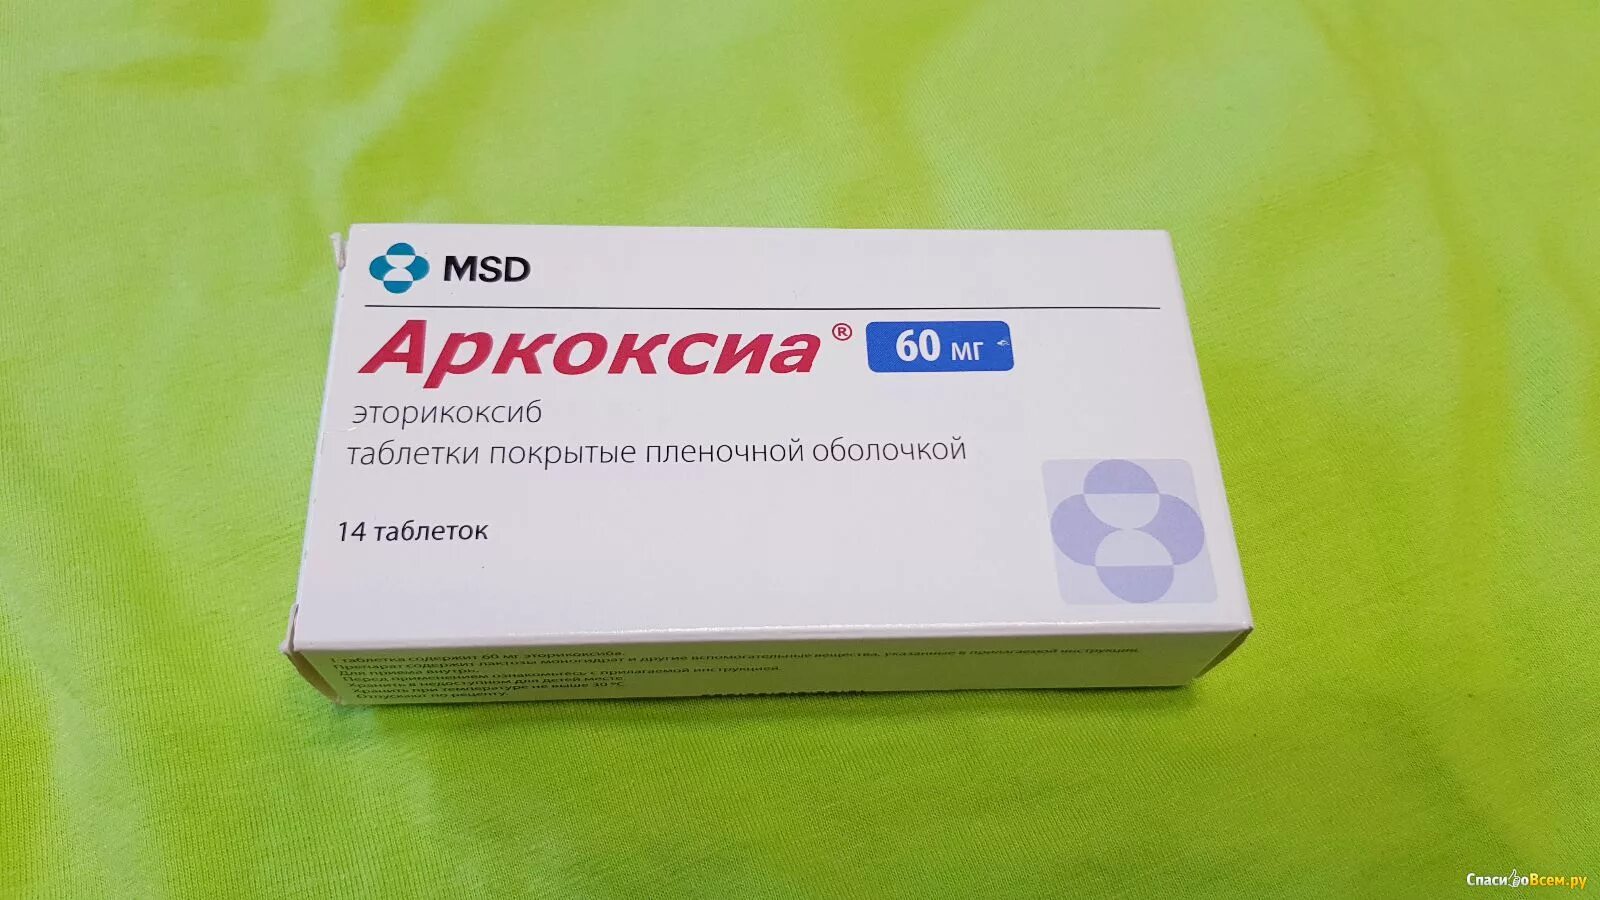 Аркоксиа 60 мг. Эторикоксиб аркоксиа. Эторикоксиб 120 мг. Аркоксиа 90 мг. Как принимать таблетки аркоксиа